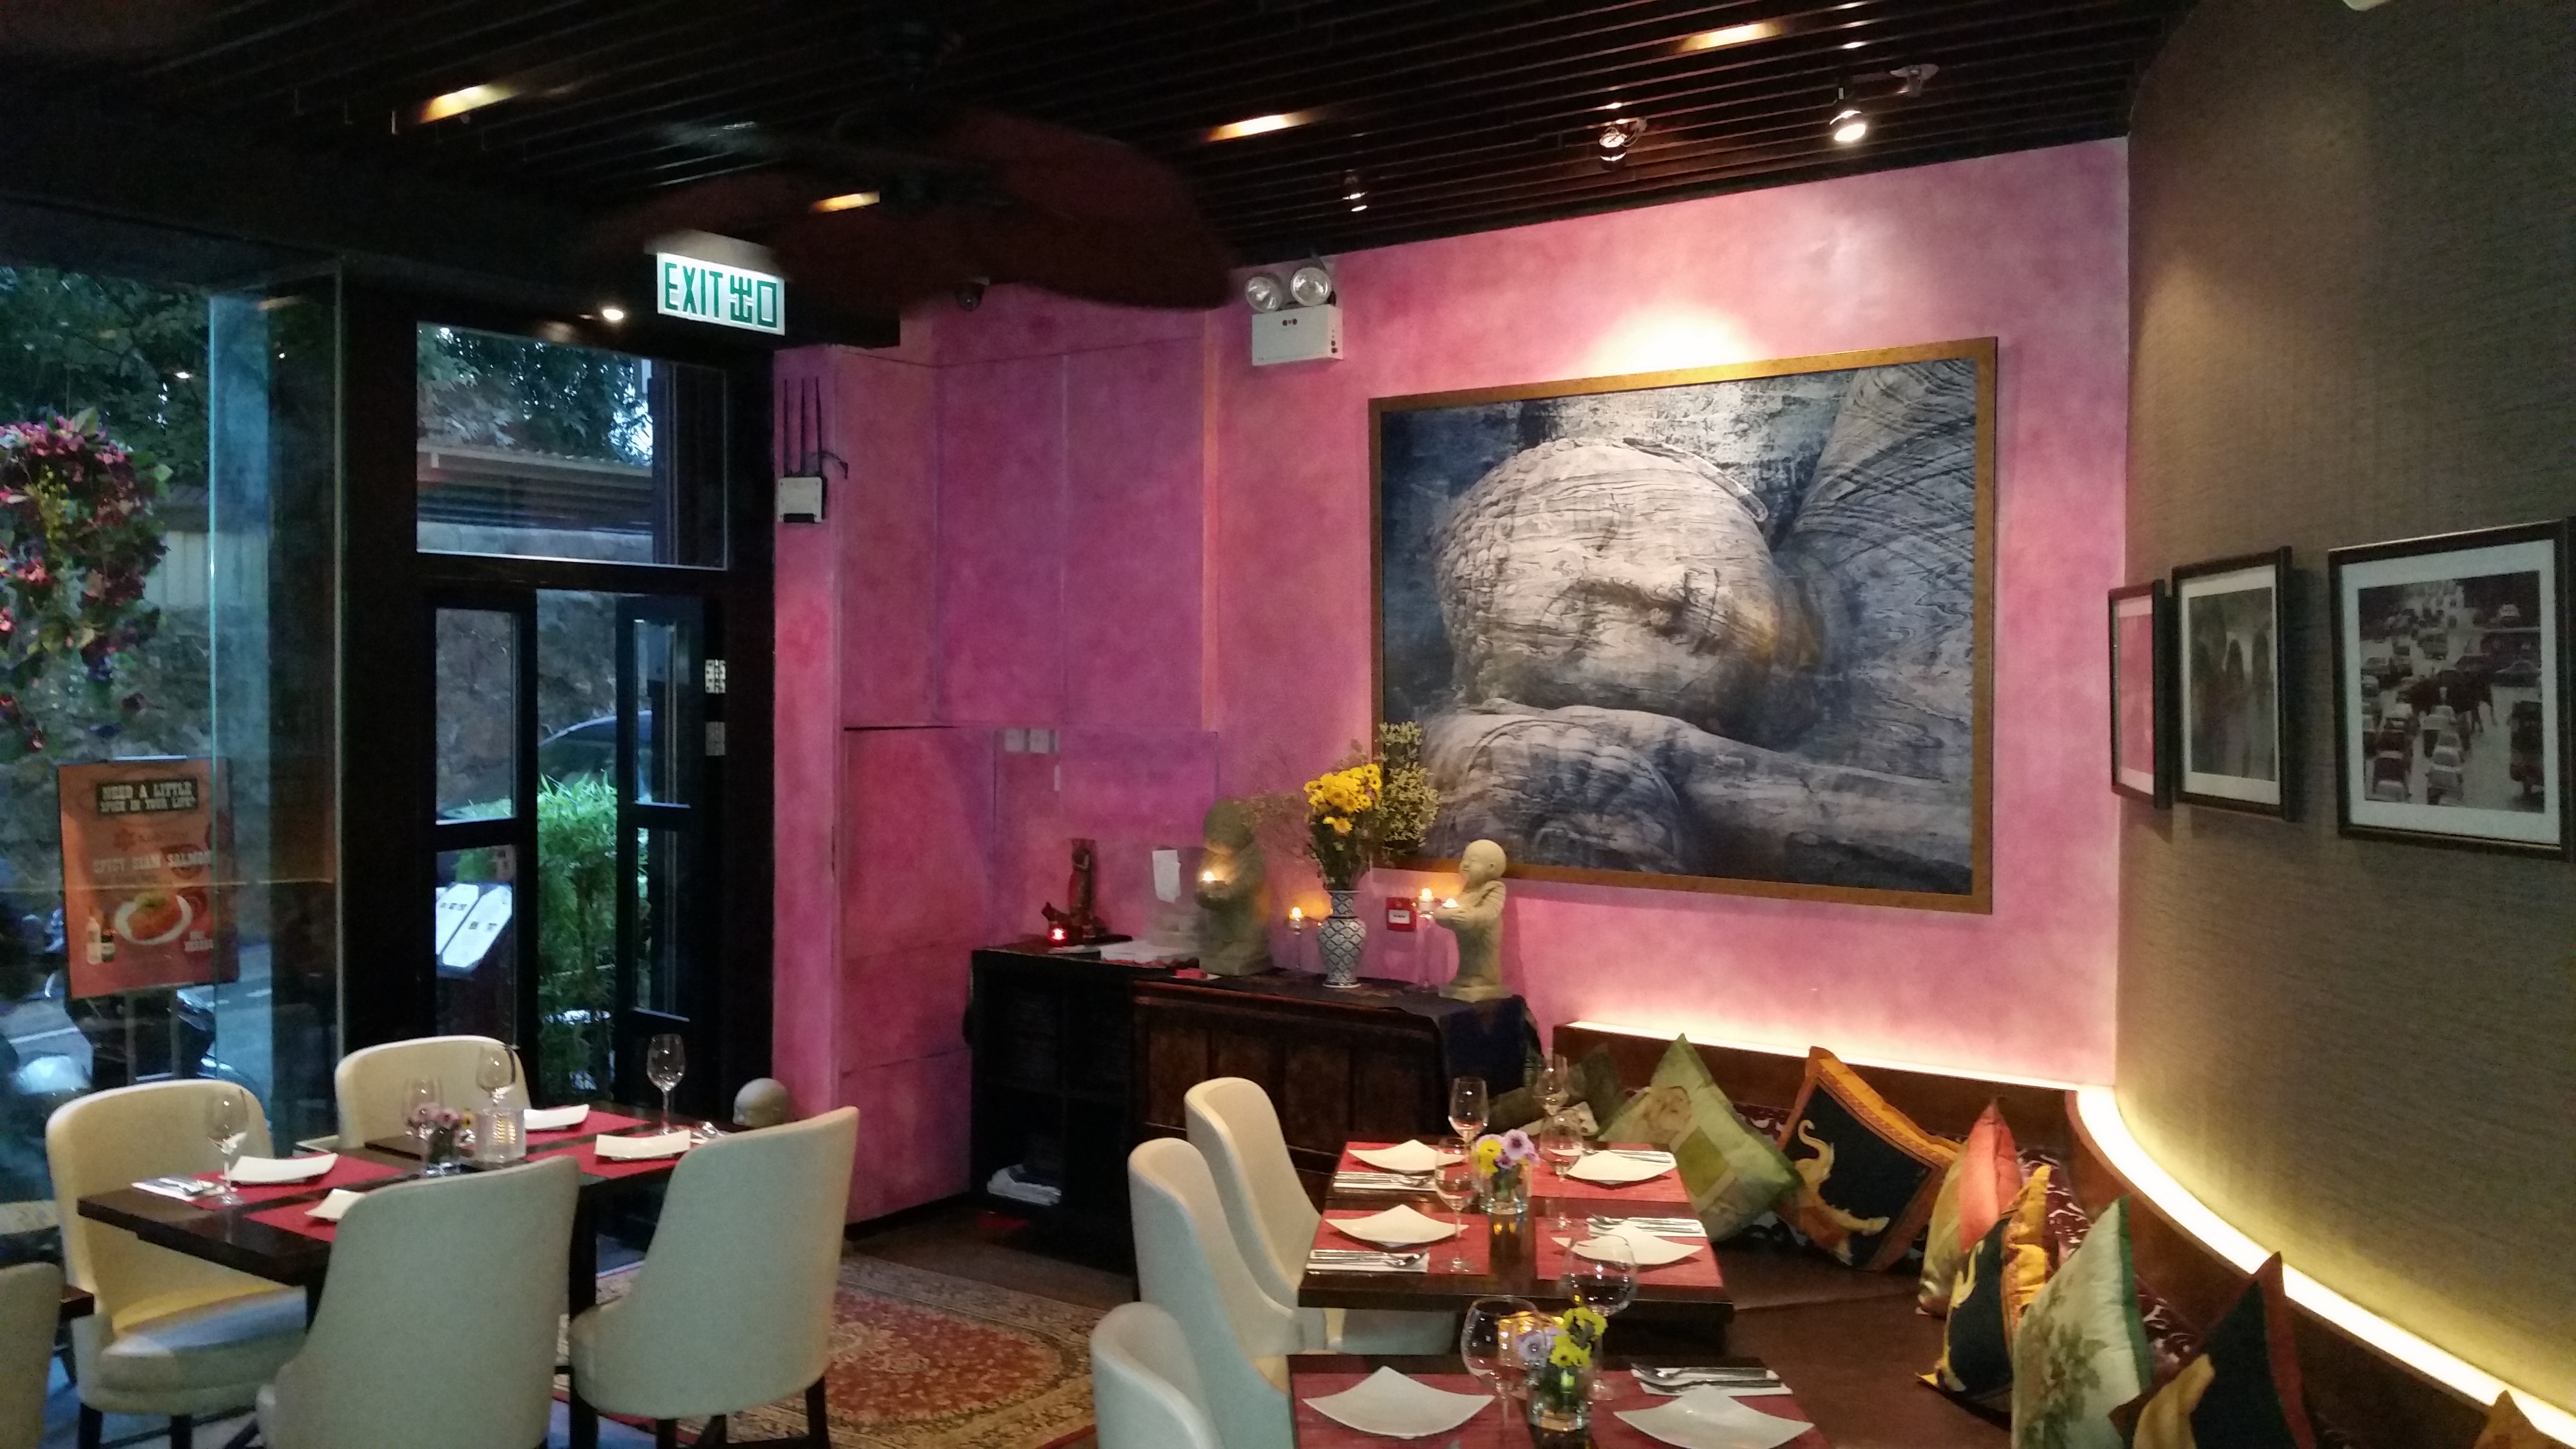 Koh Thai restaurant renovation including bespoke paint finish, SoHo